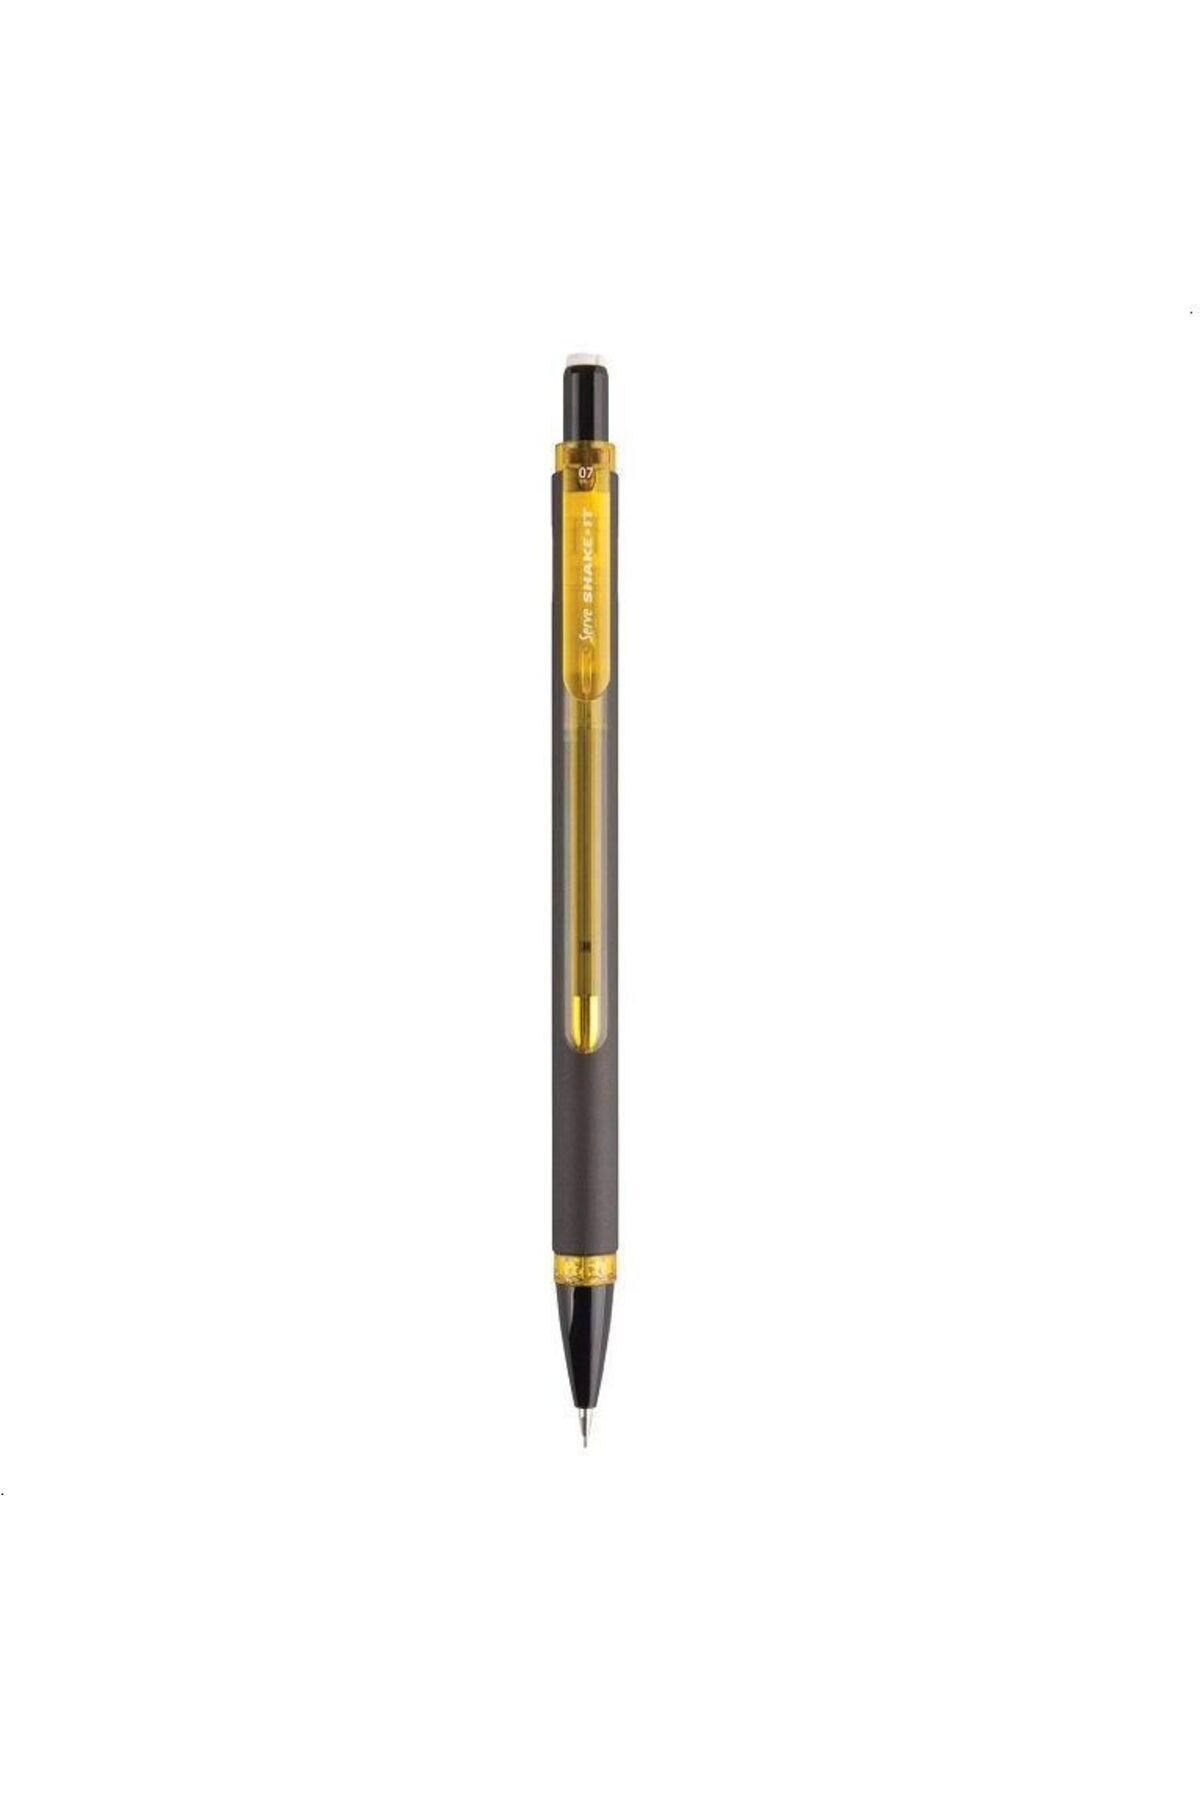 Serve Shake-it Mekanik Kurşun Kalem 0.7 Mm Siyah-sarı